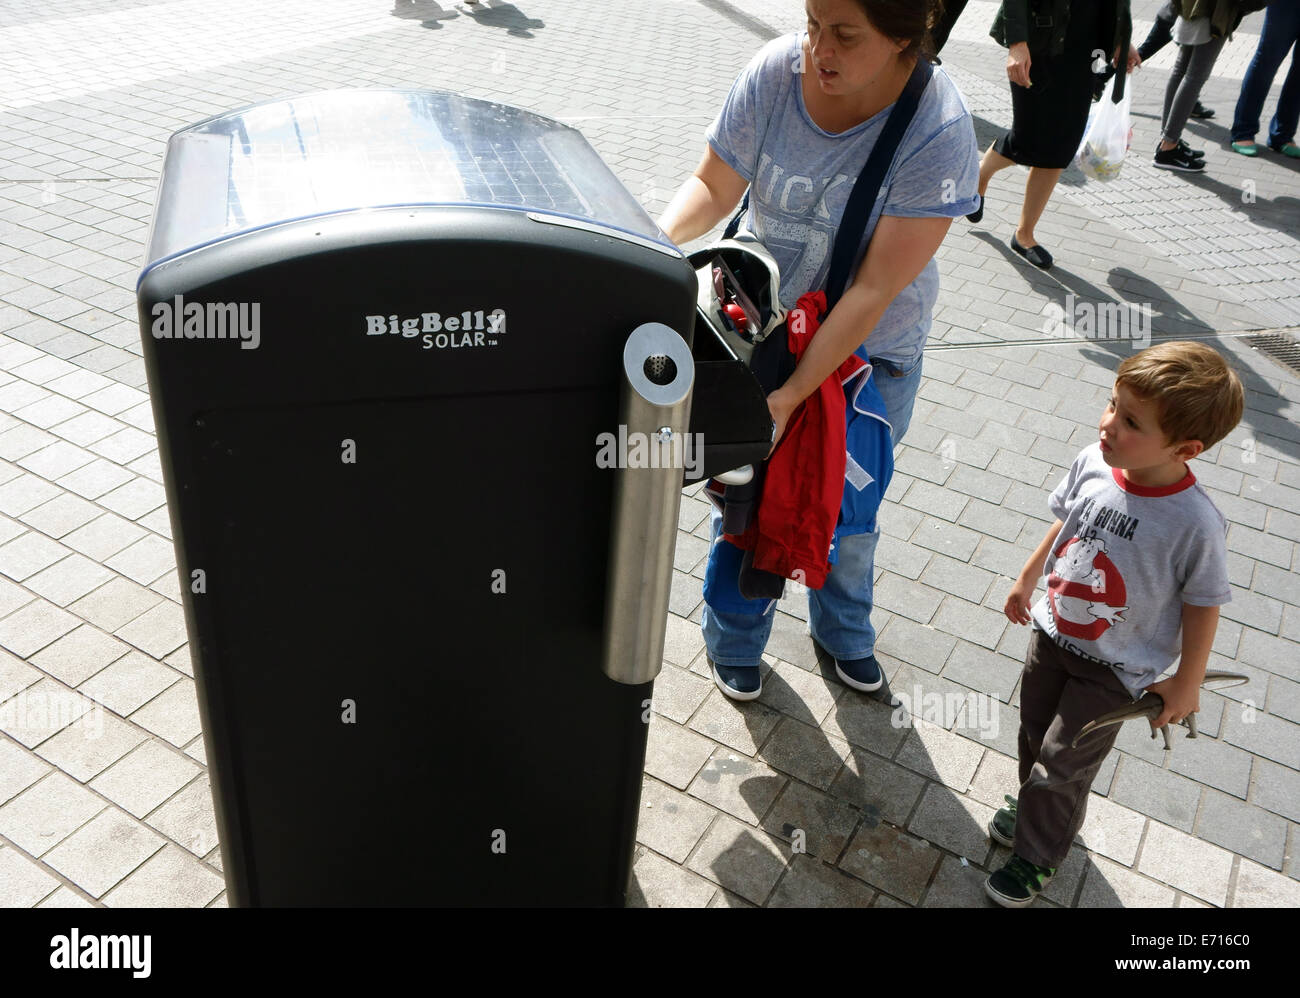 Solar powered rubbish compacting bin, South Kensington, London Stock Photo